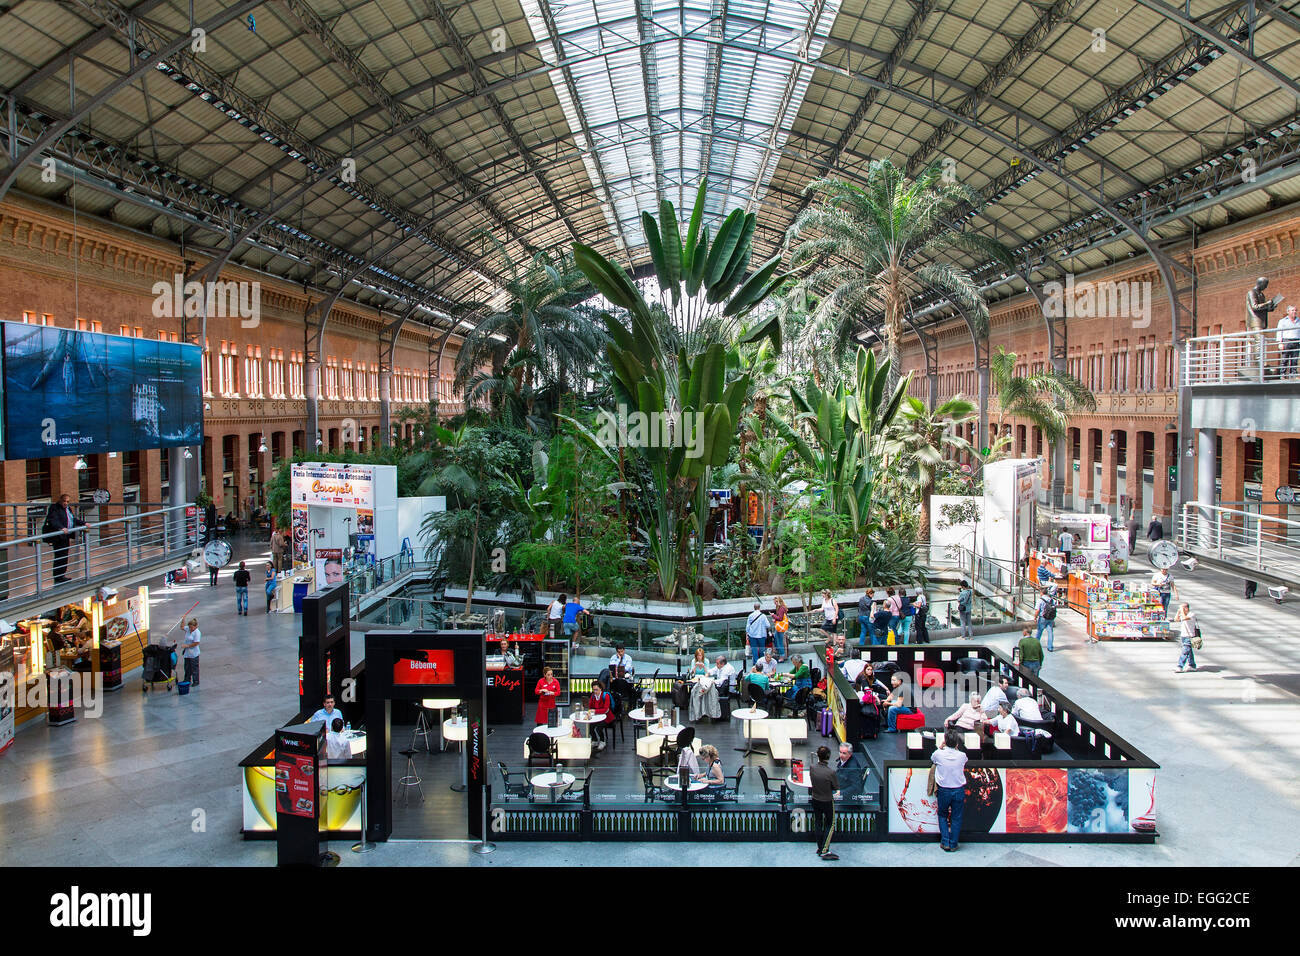 Madrid, View inside the Atocha railway station Stock Photo